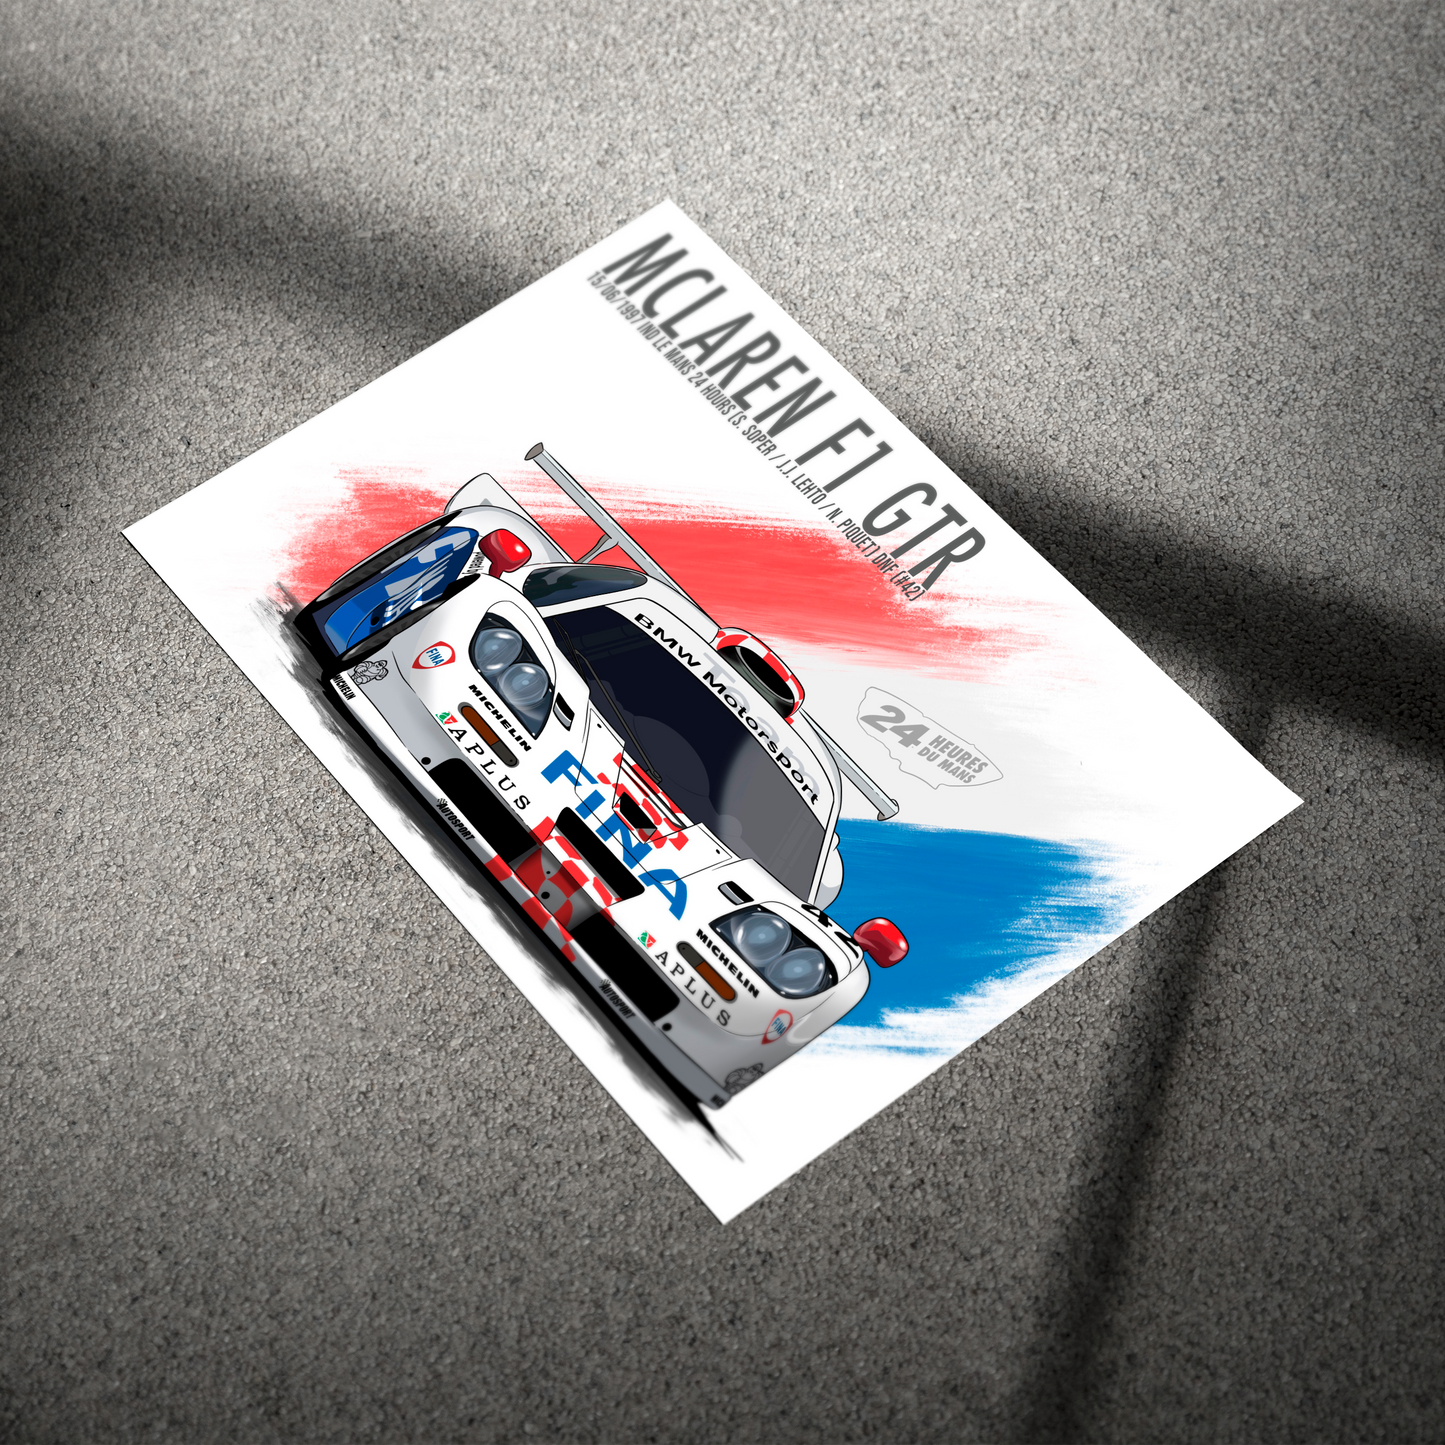 Mclaren F1 GTR 1997 24 Hours of Le Mans poster